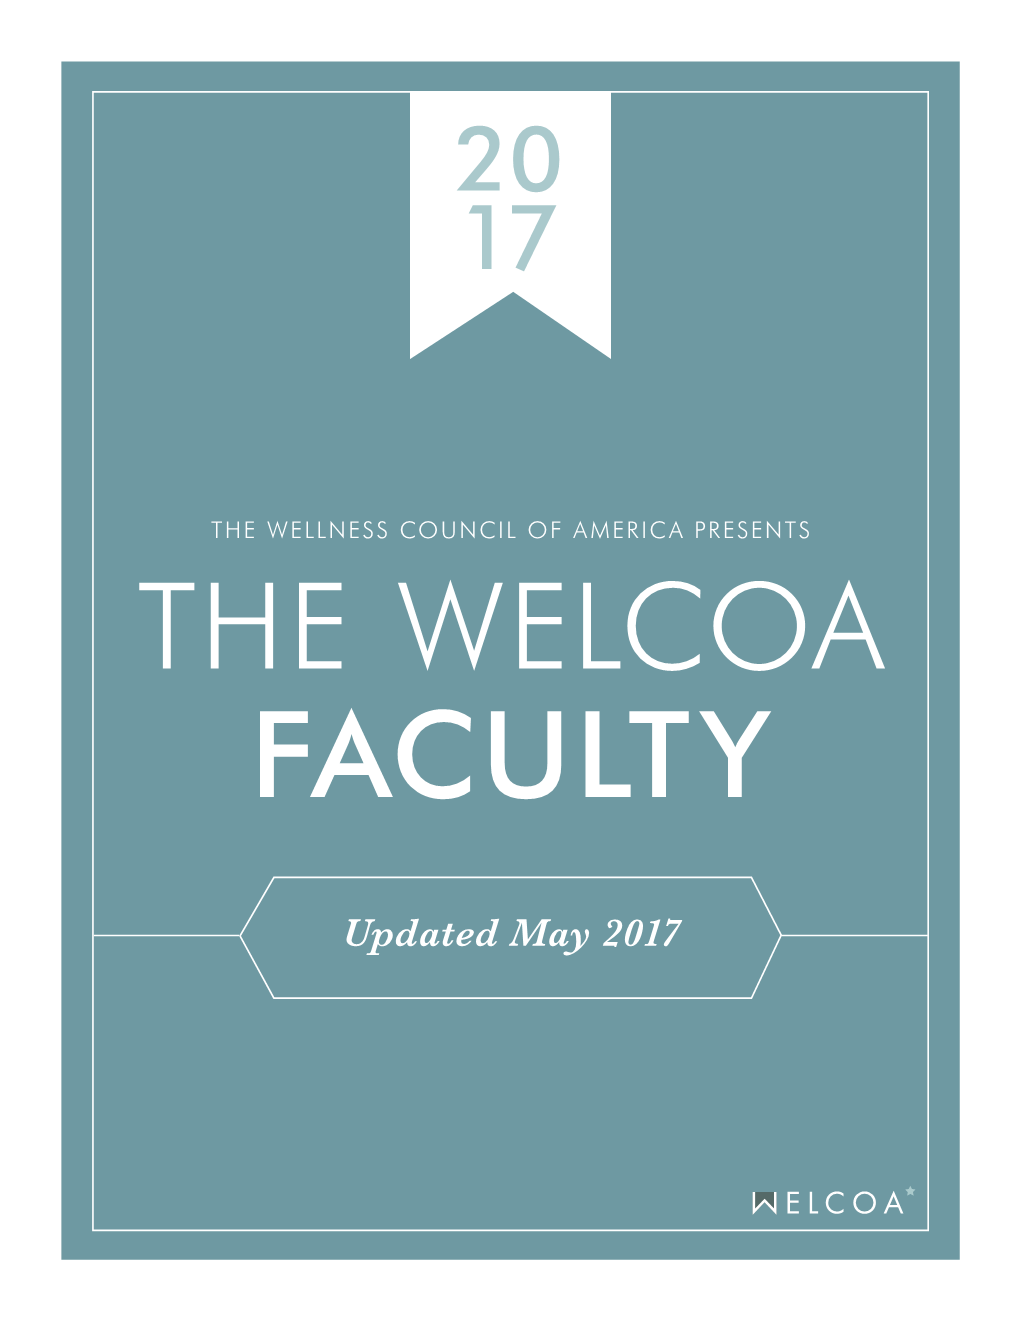 The Welcoa Faculty